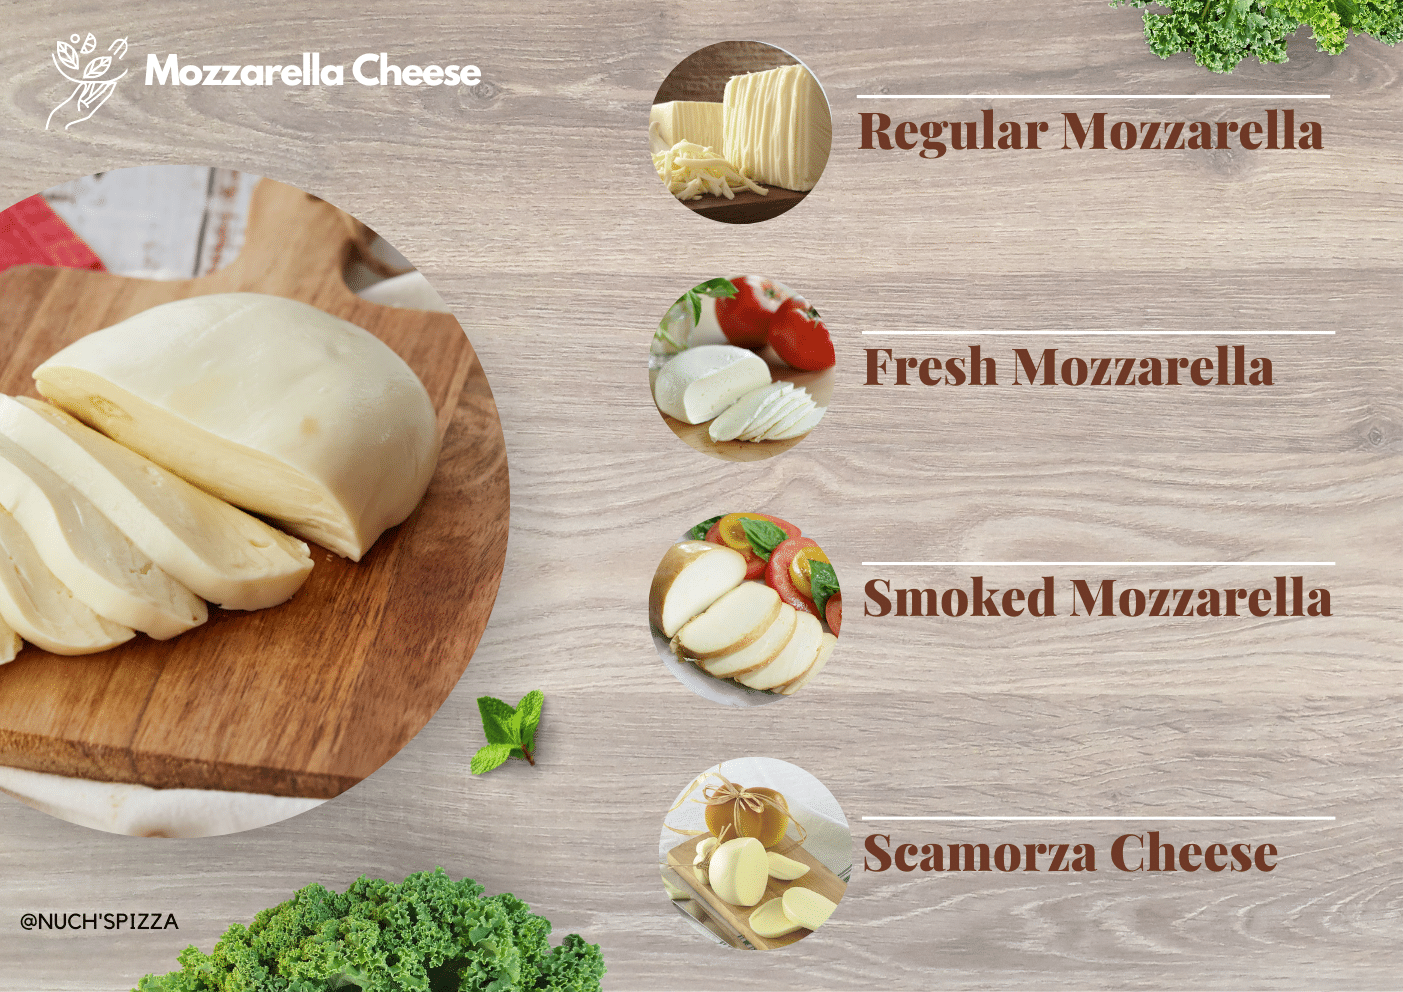 Mozzarella cheese in different types